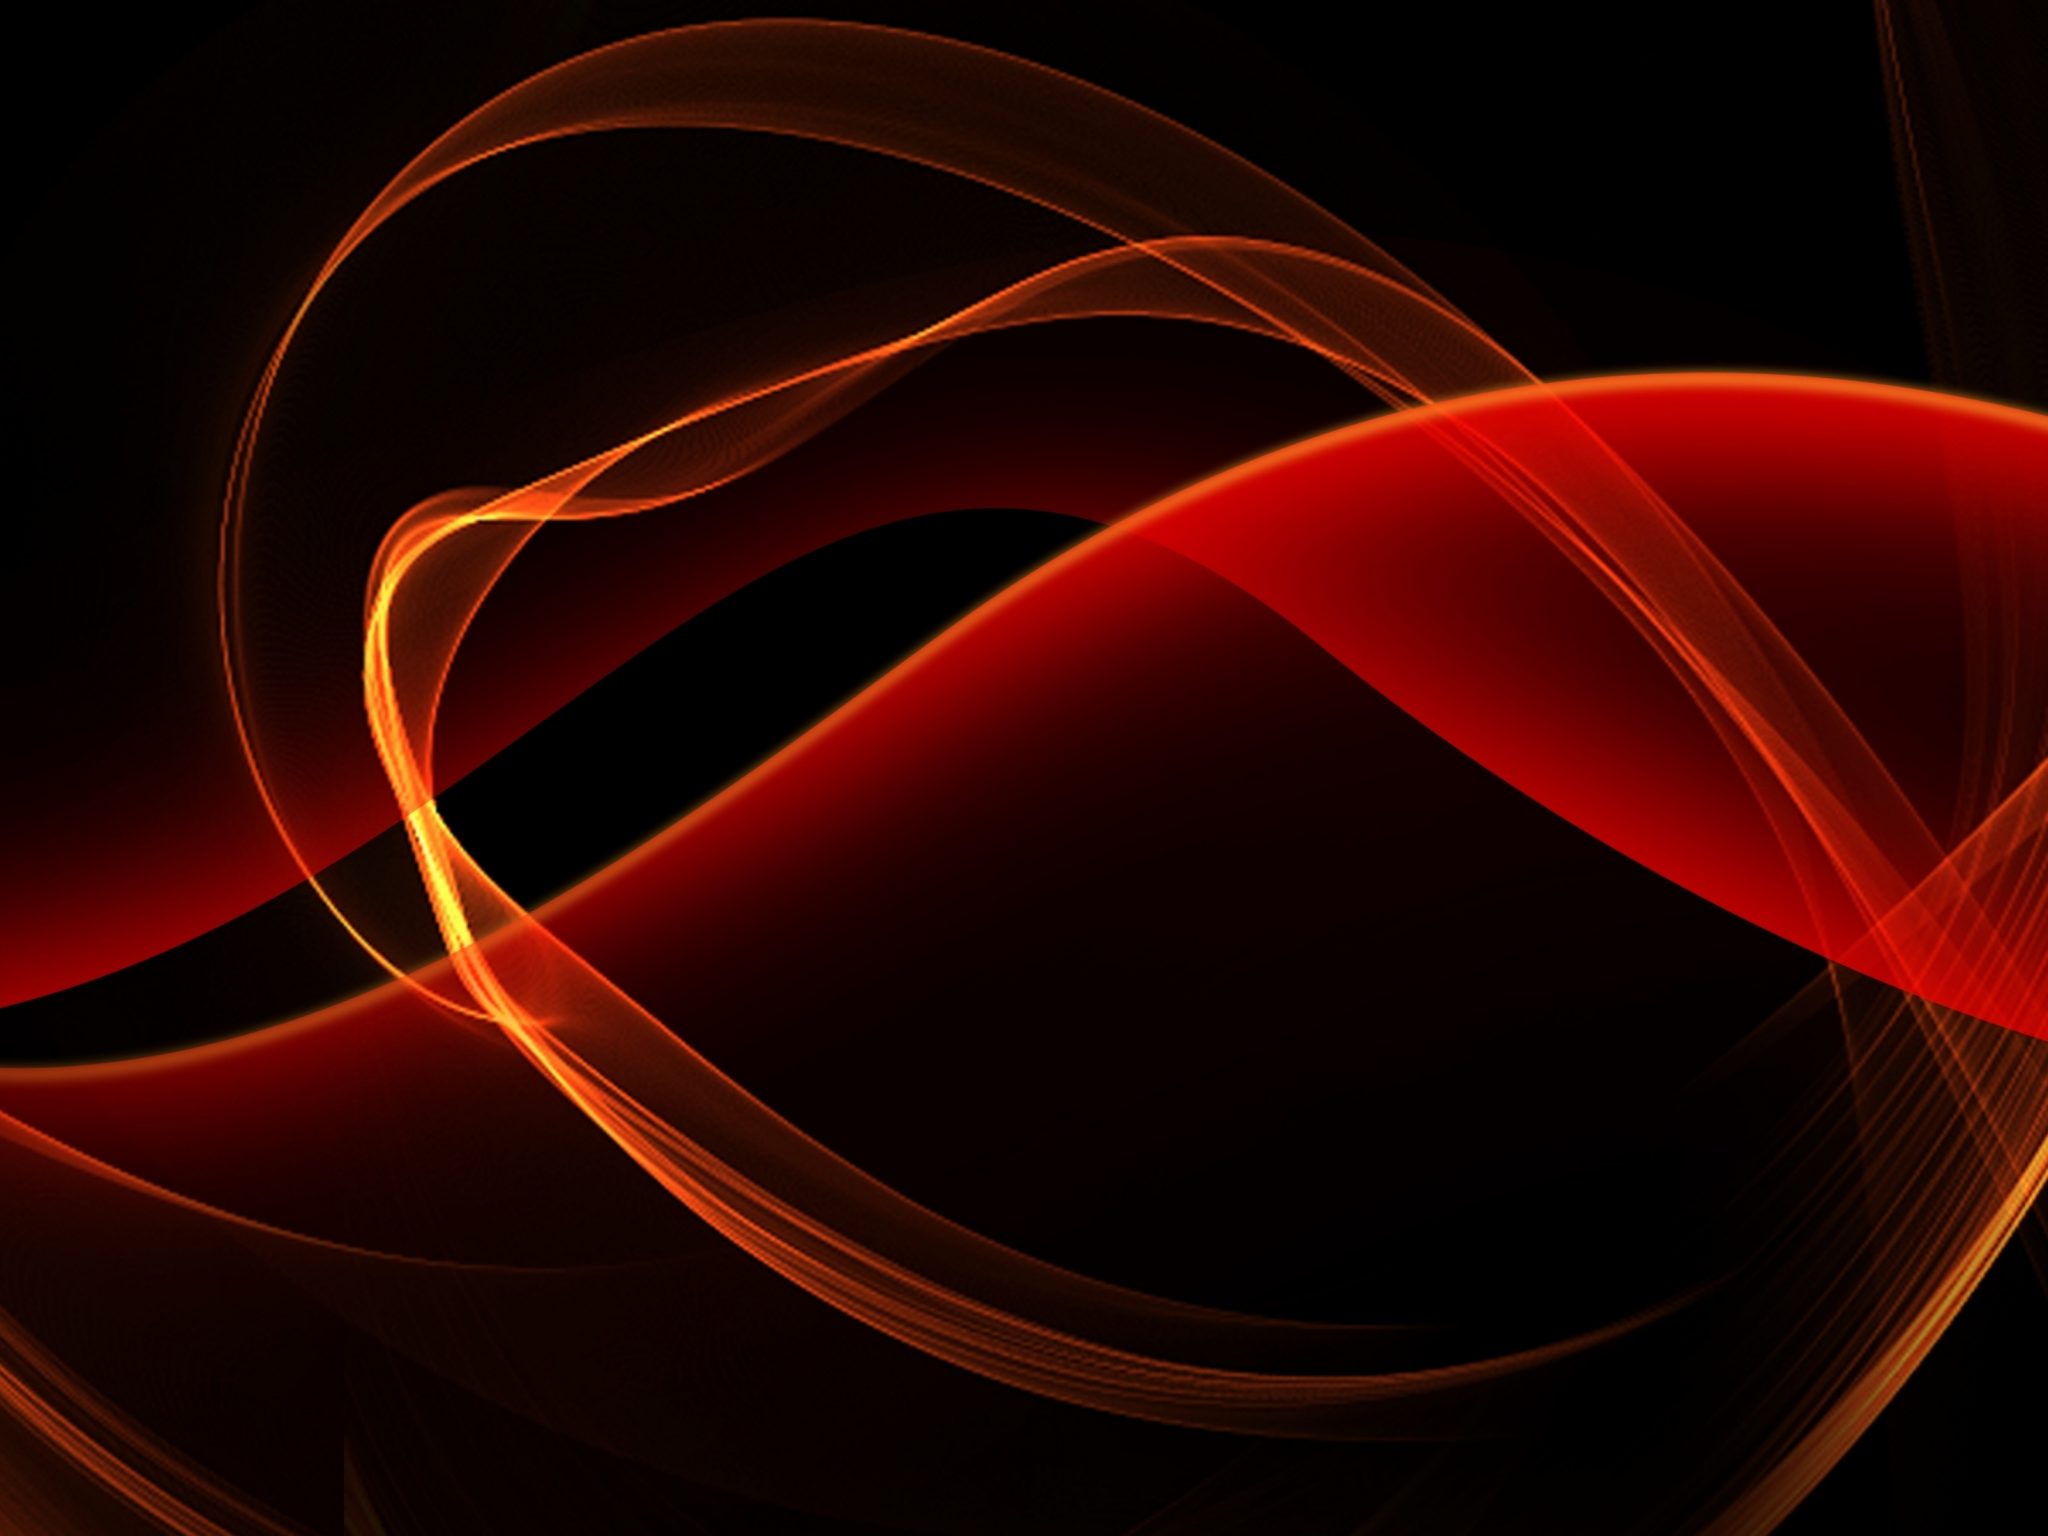 2048x1536 wallpaper Black and Red Glowing Curves iPad Wallpaper 2048x1536 pixels resolution